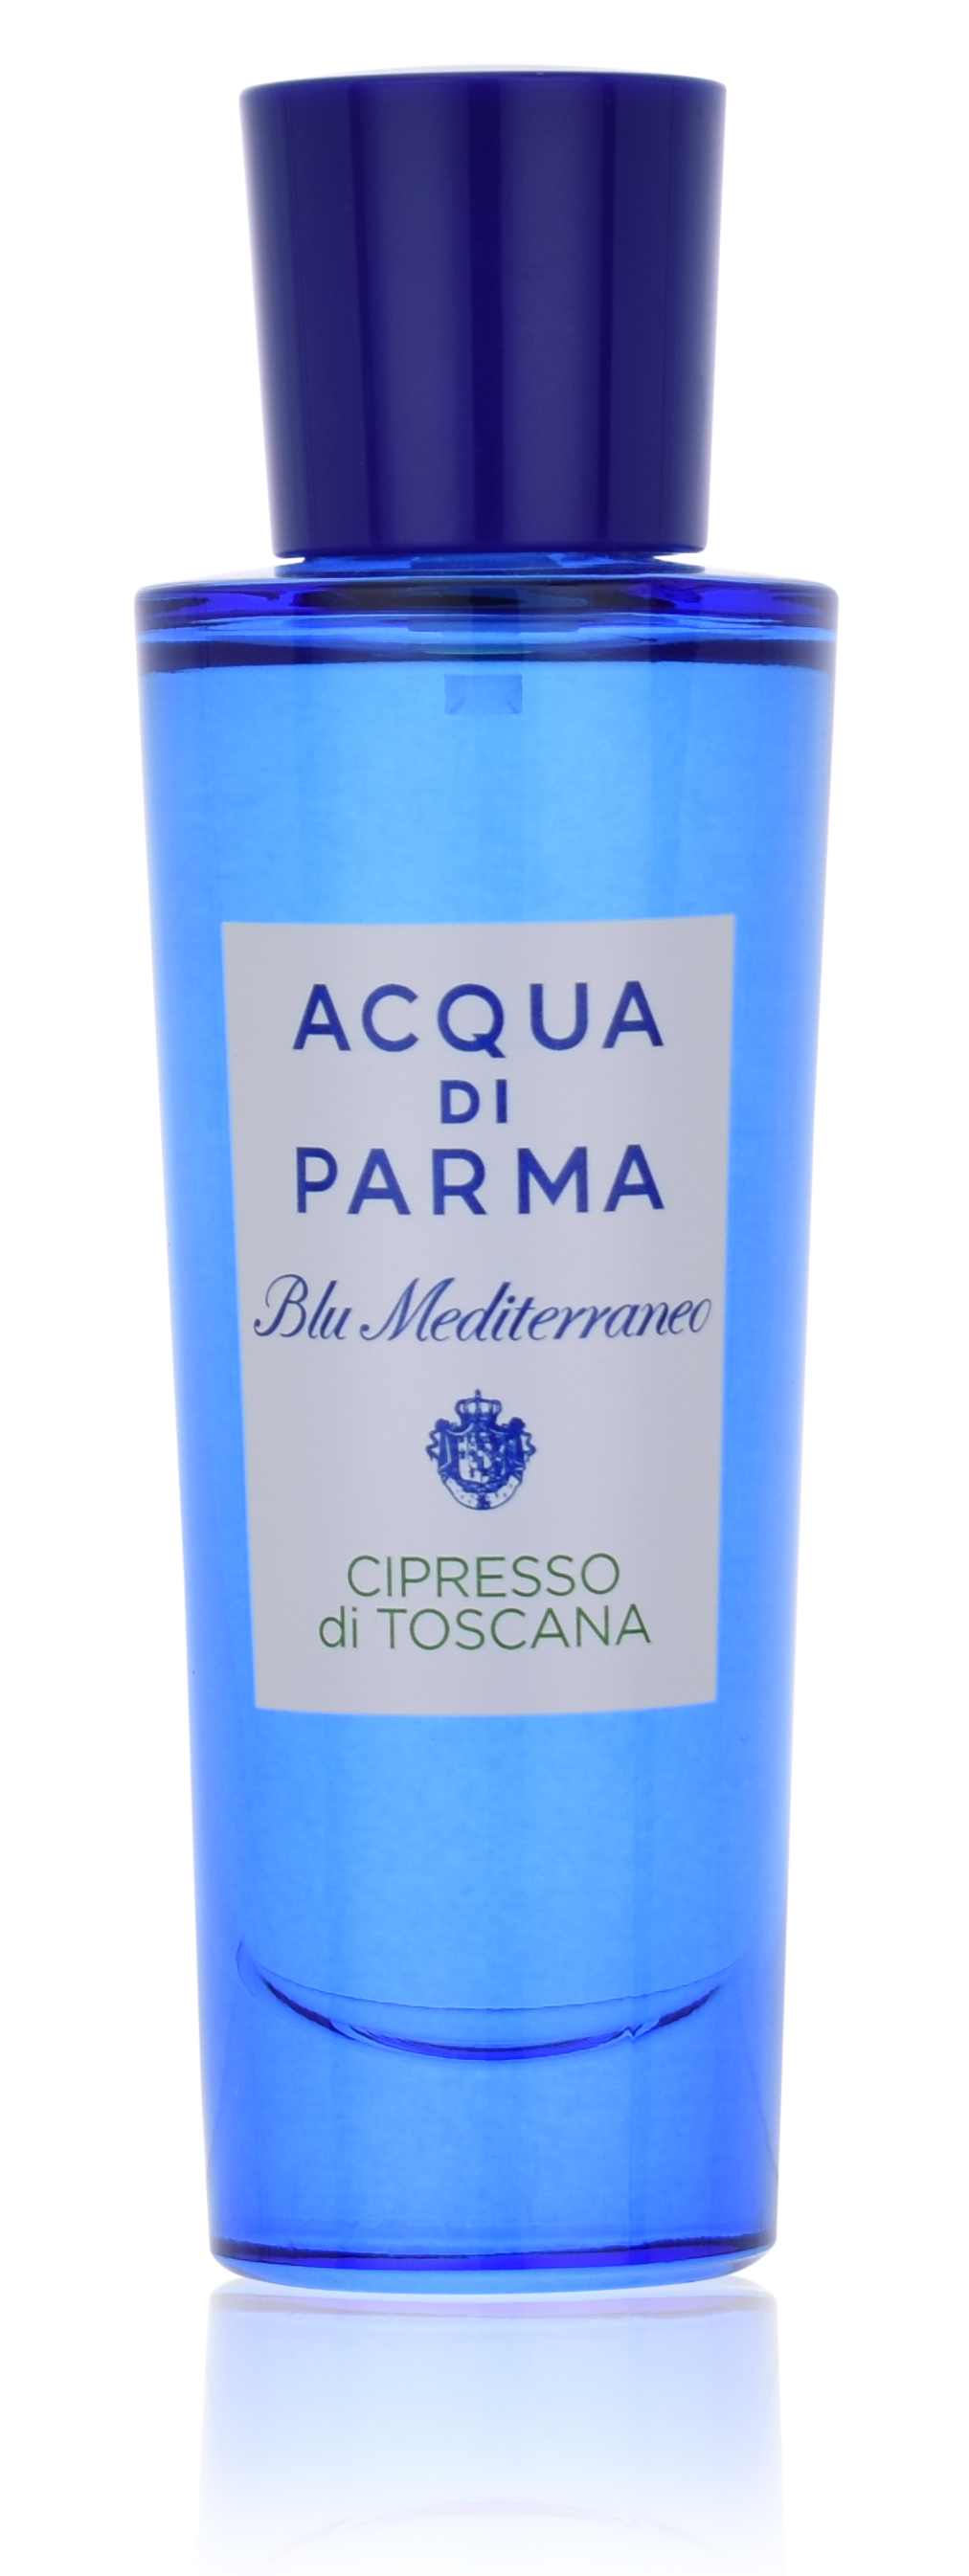 Acqua di Parma Blu Mediterraneo Cipresso di Toscana 30 ml Eau de Toilette